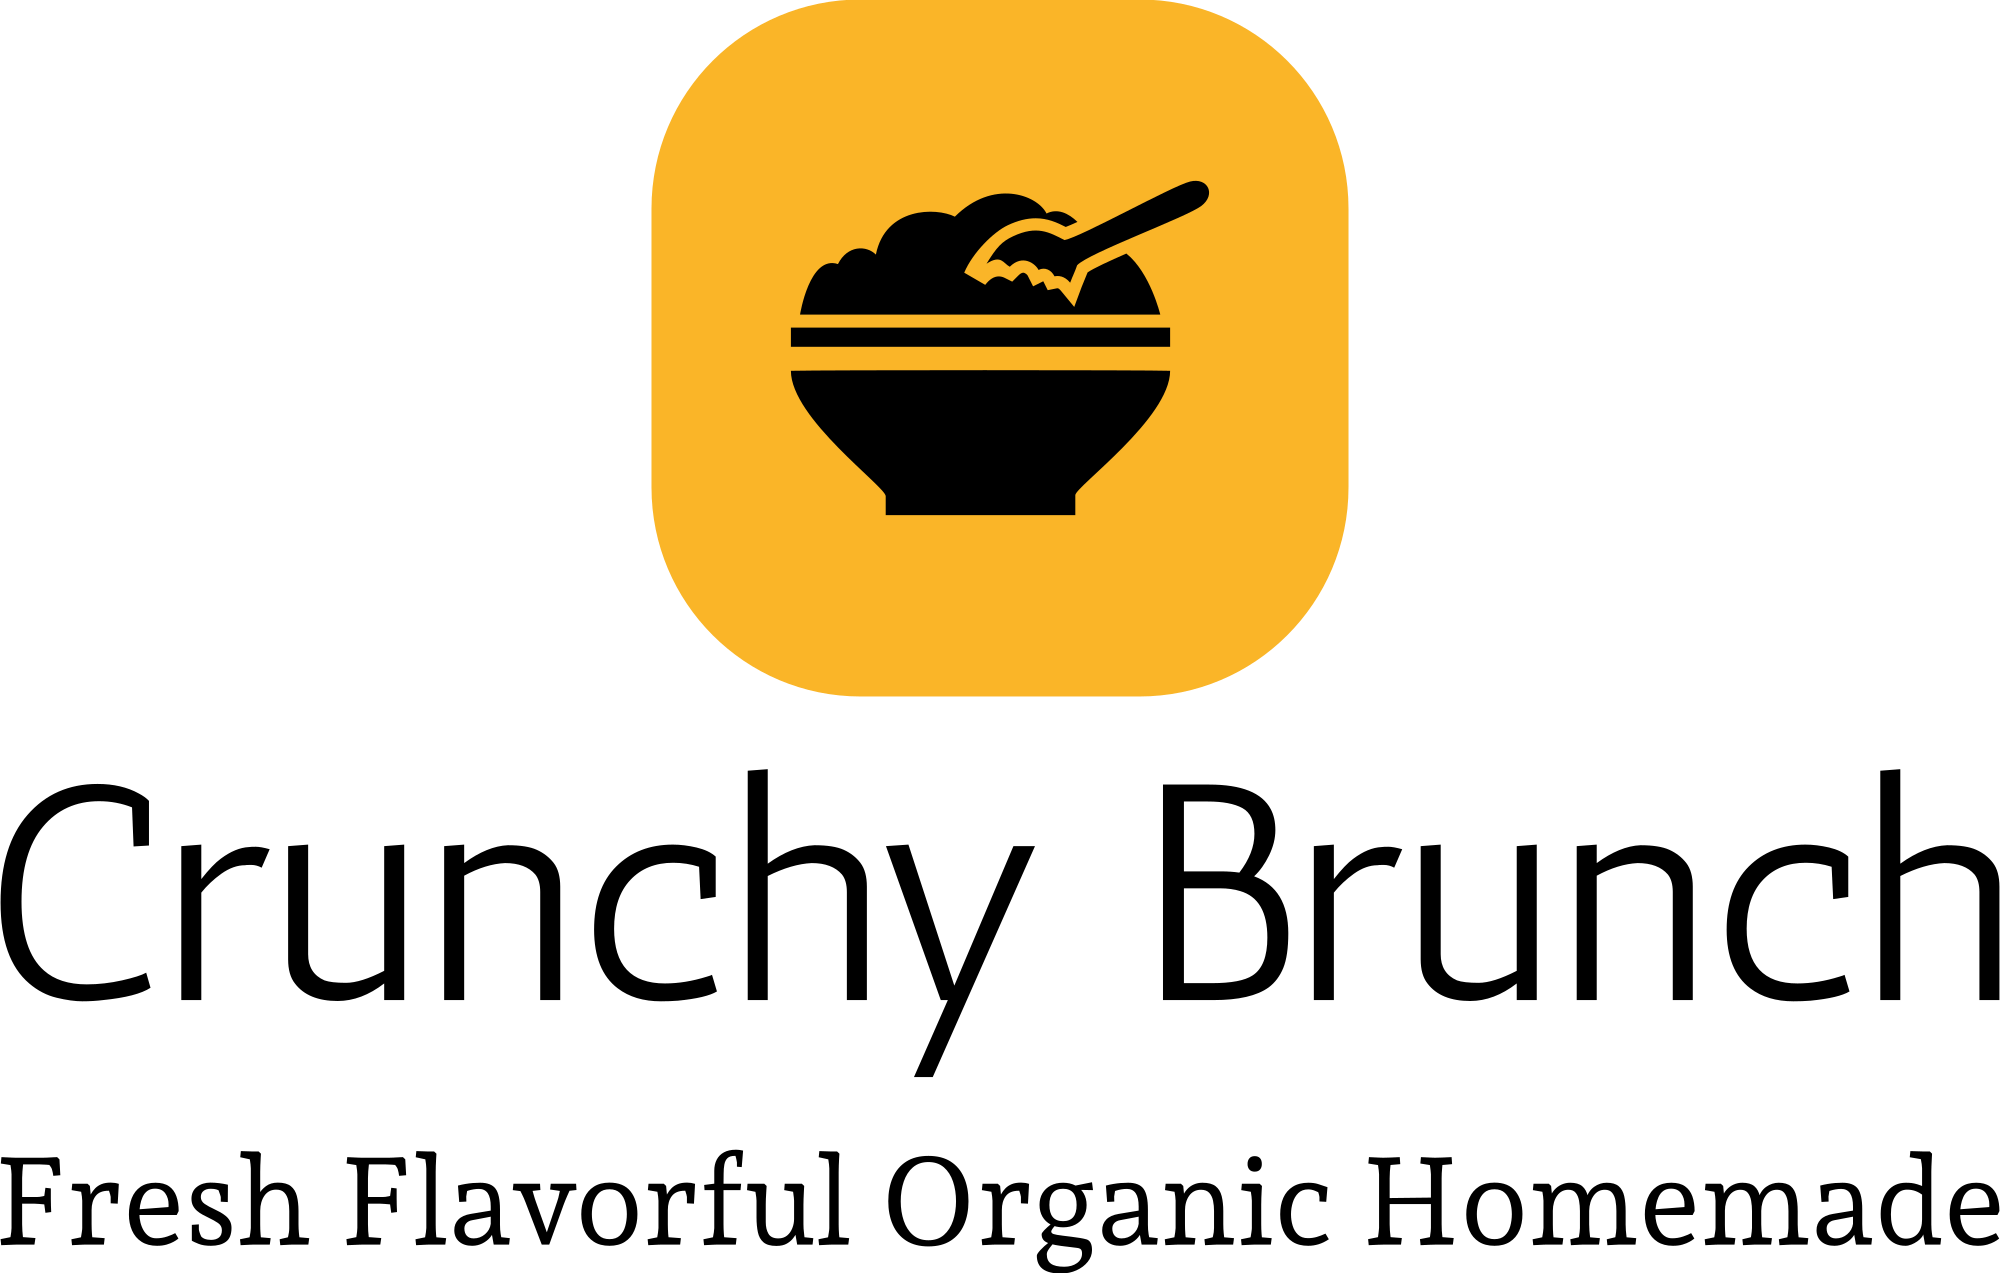 Crunchy Brunch